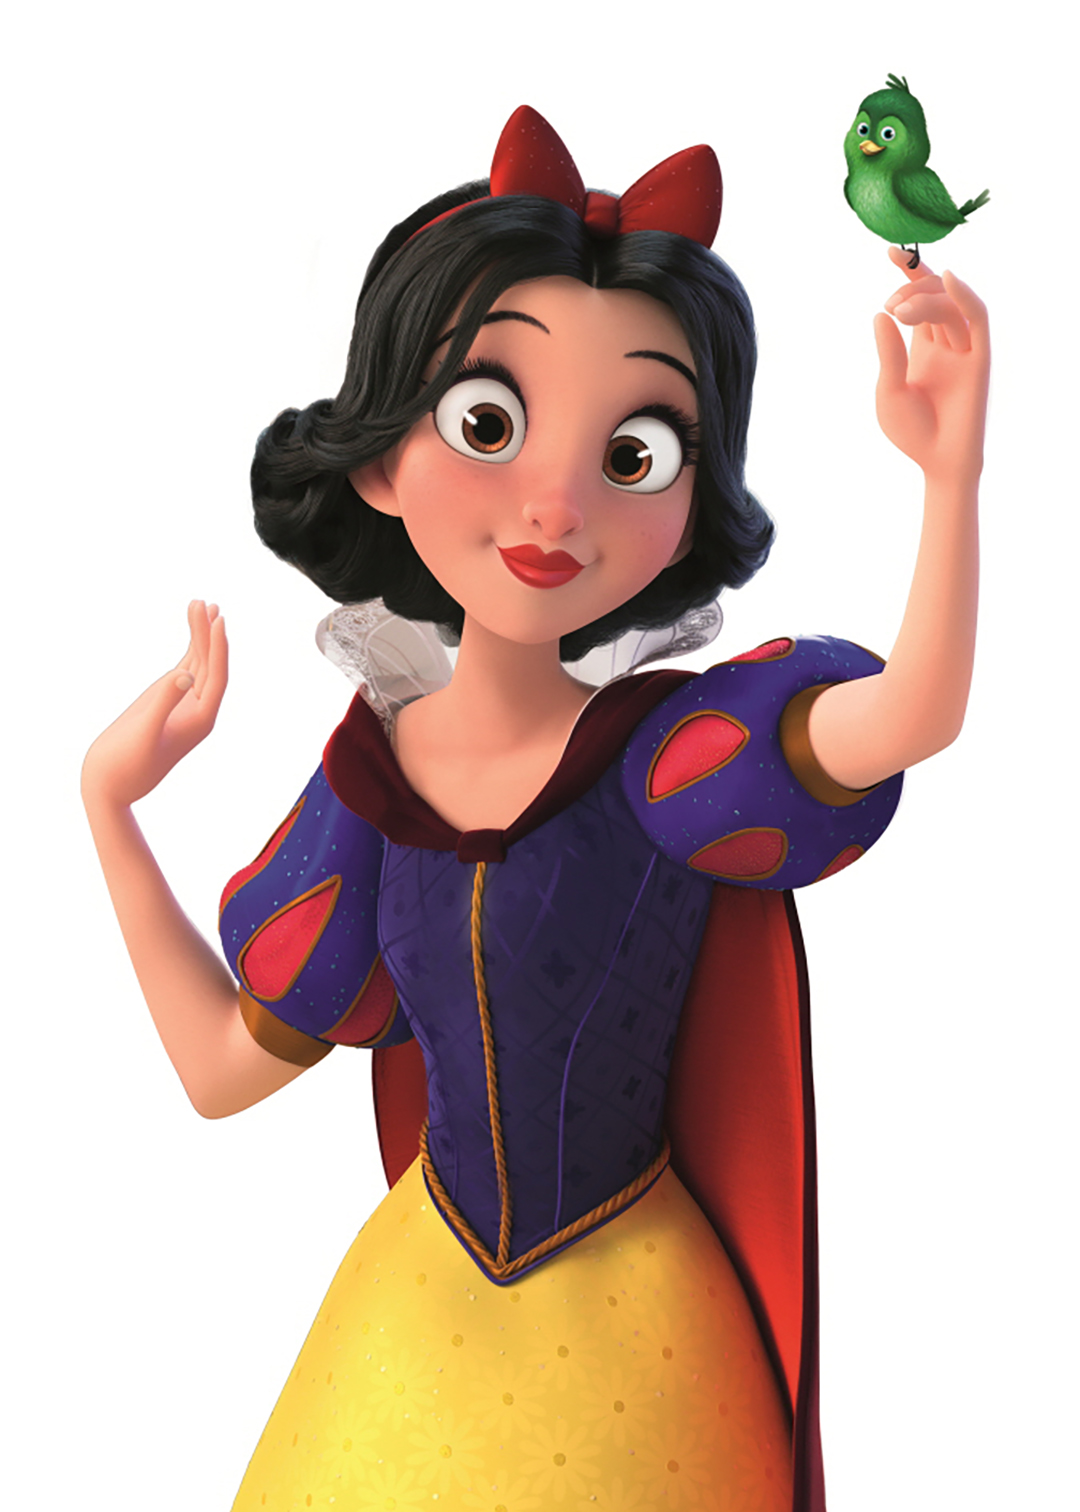 Disney Princesses | Wreck-It Ralph Wiki | Fandom